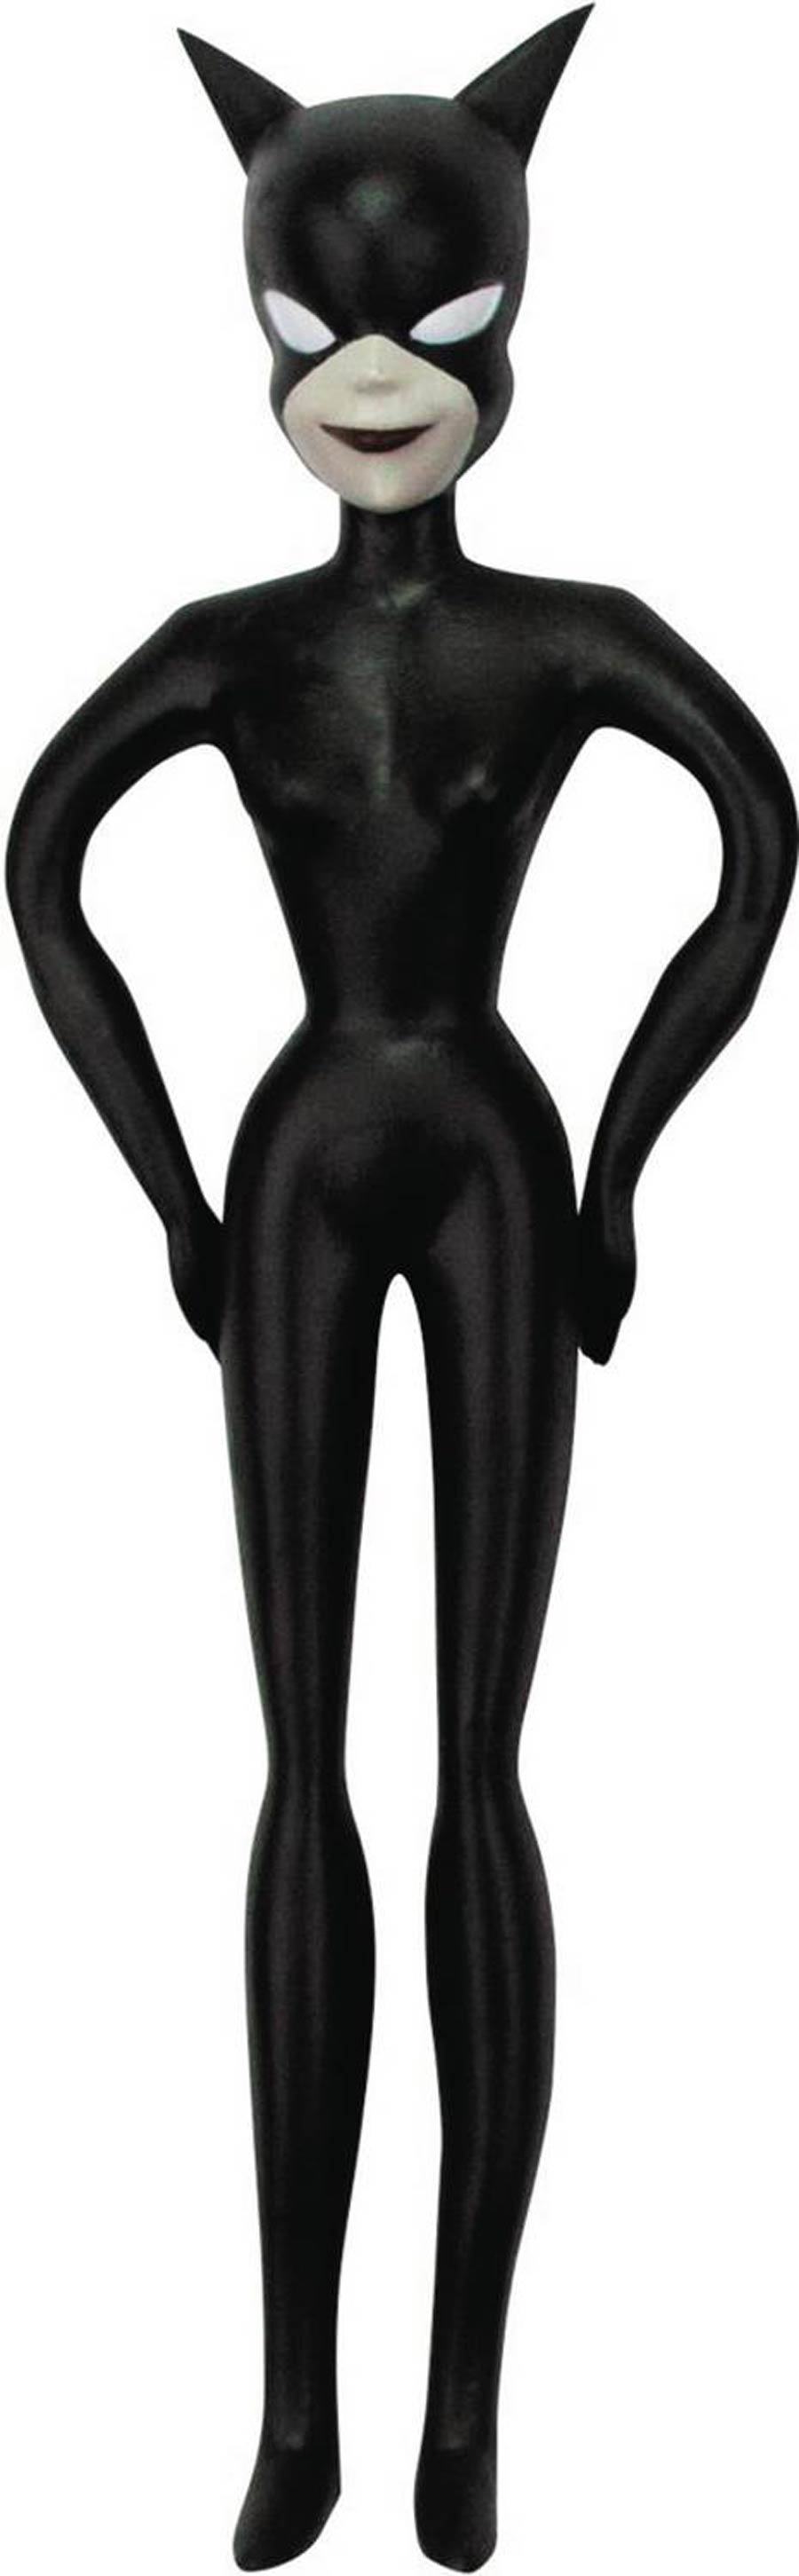 New Batman Adventures Bendable Figure - Catwoman